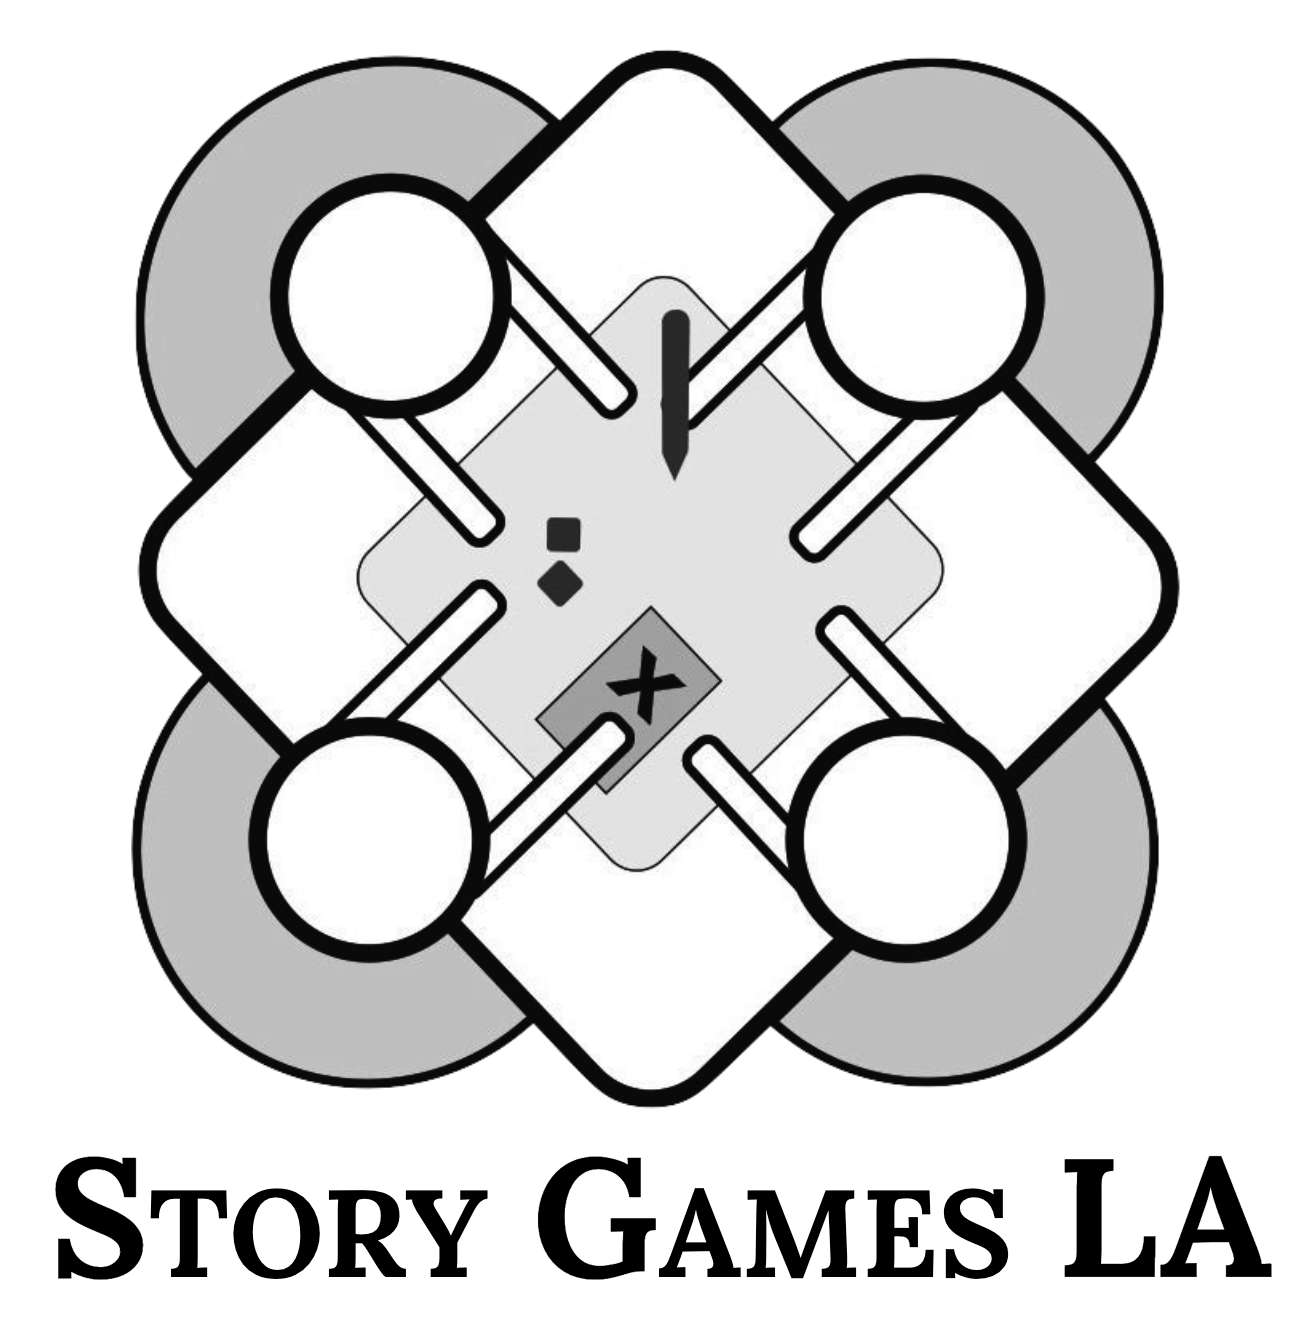 Story Games LA